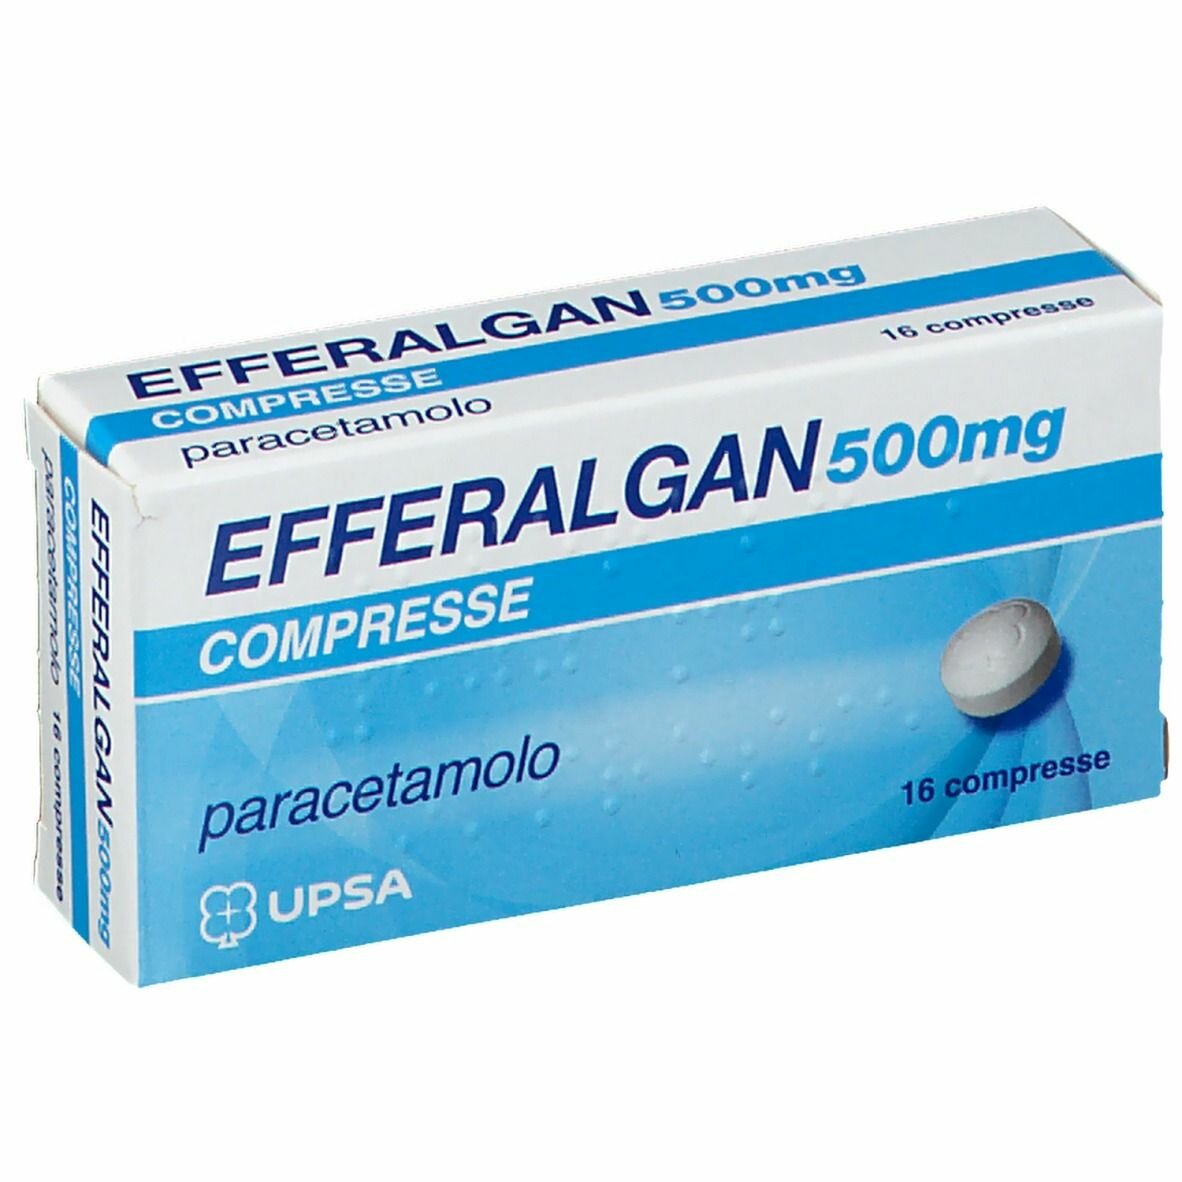 Efferalgan 500 mg paracetamolo 16 compresse img